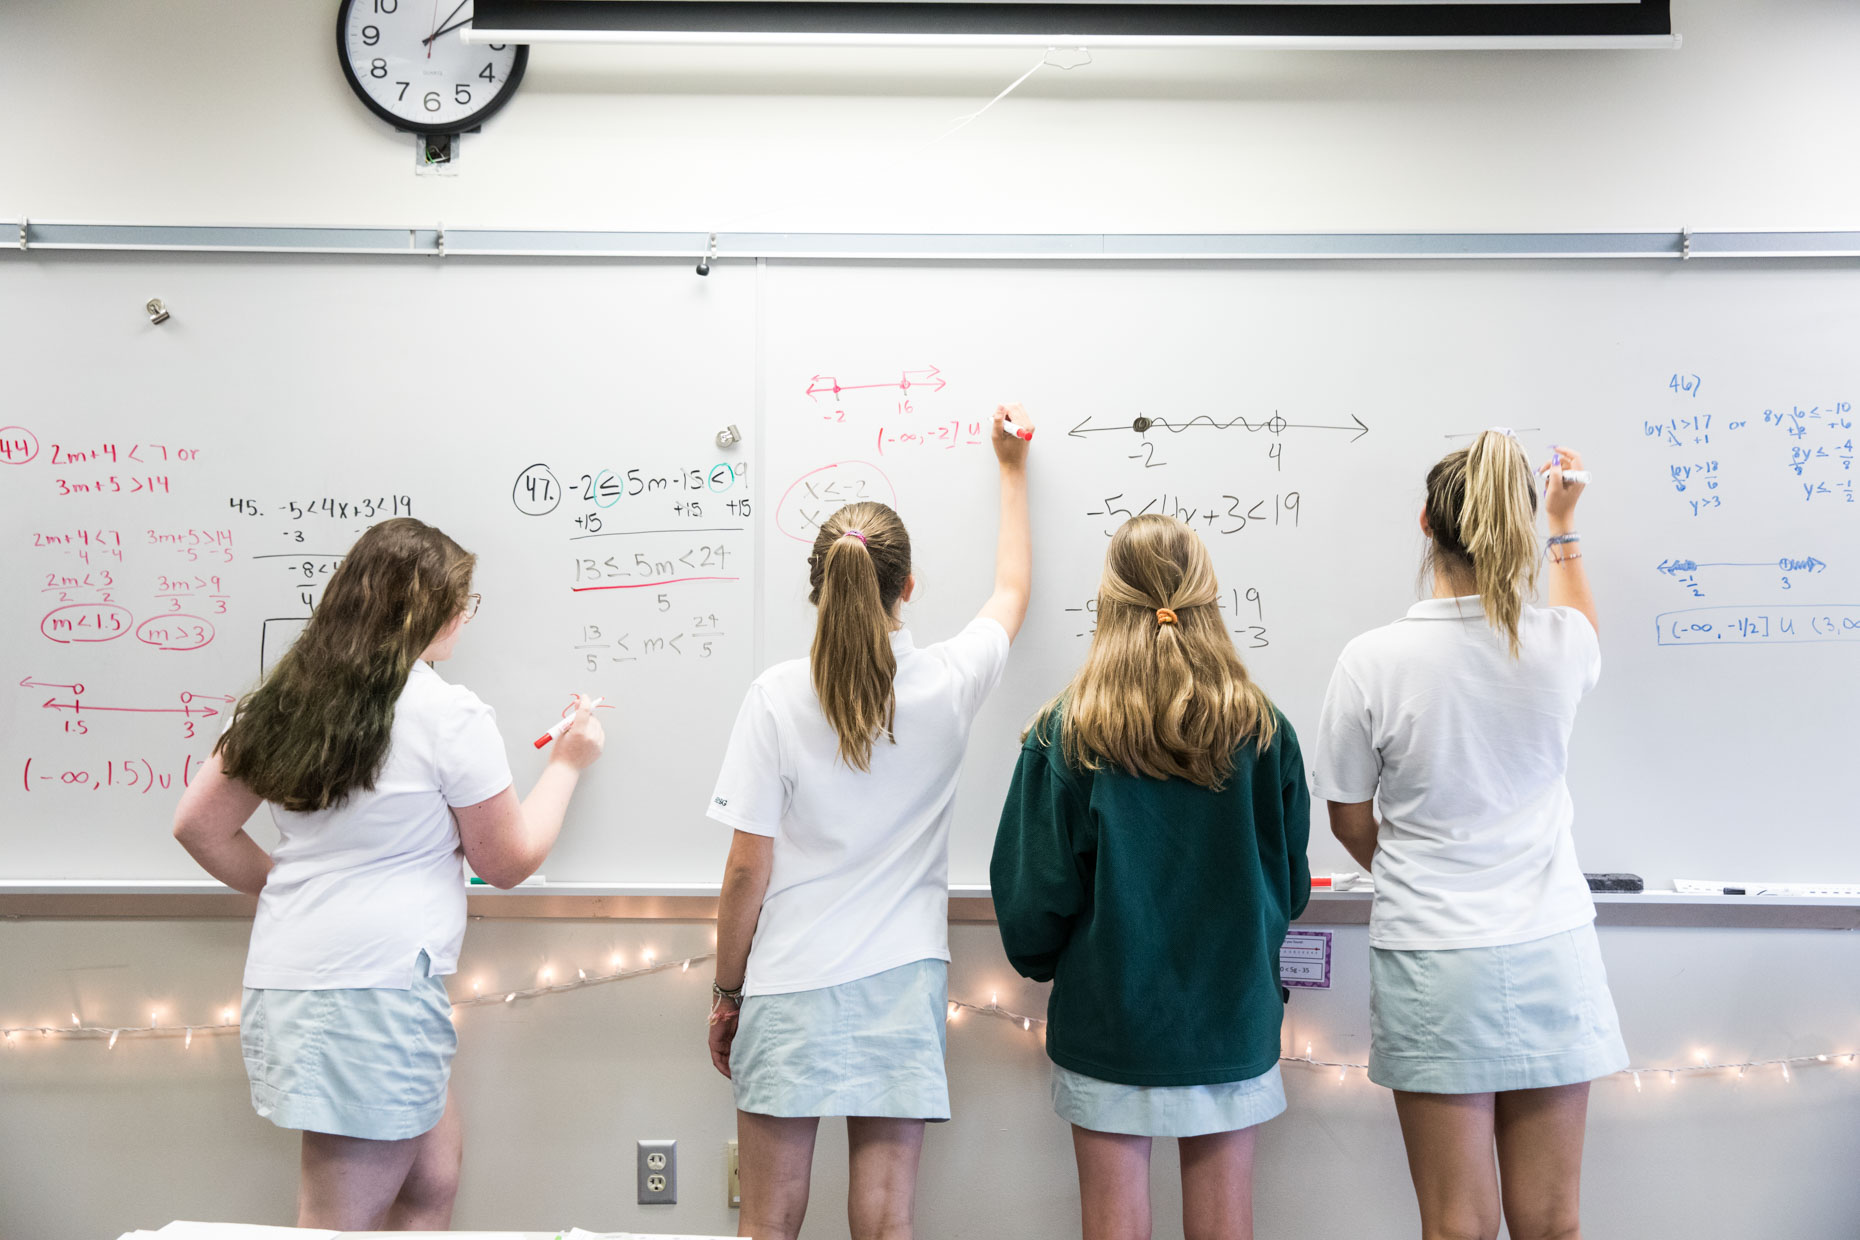 Girls in uniform writing on white board in classroom.